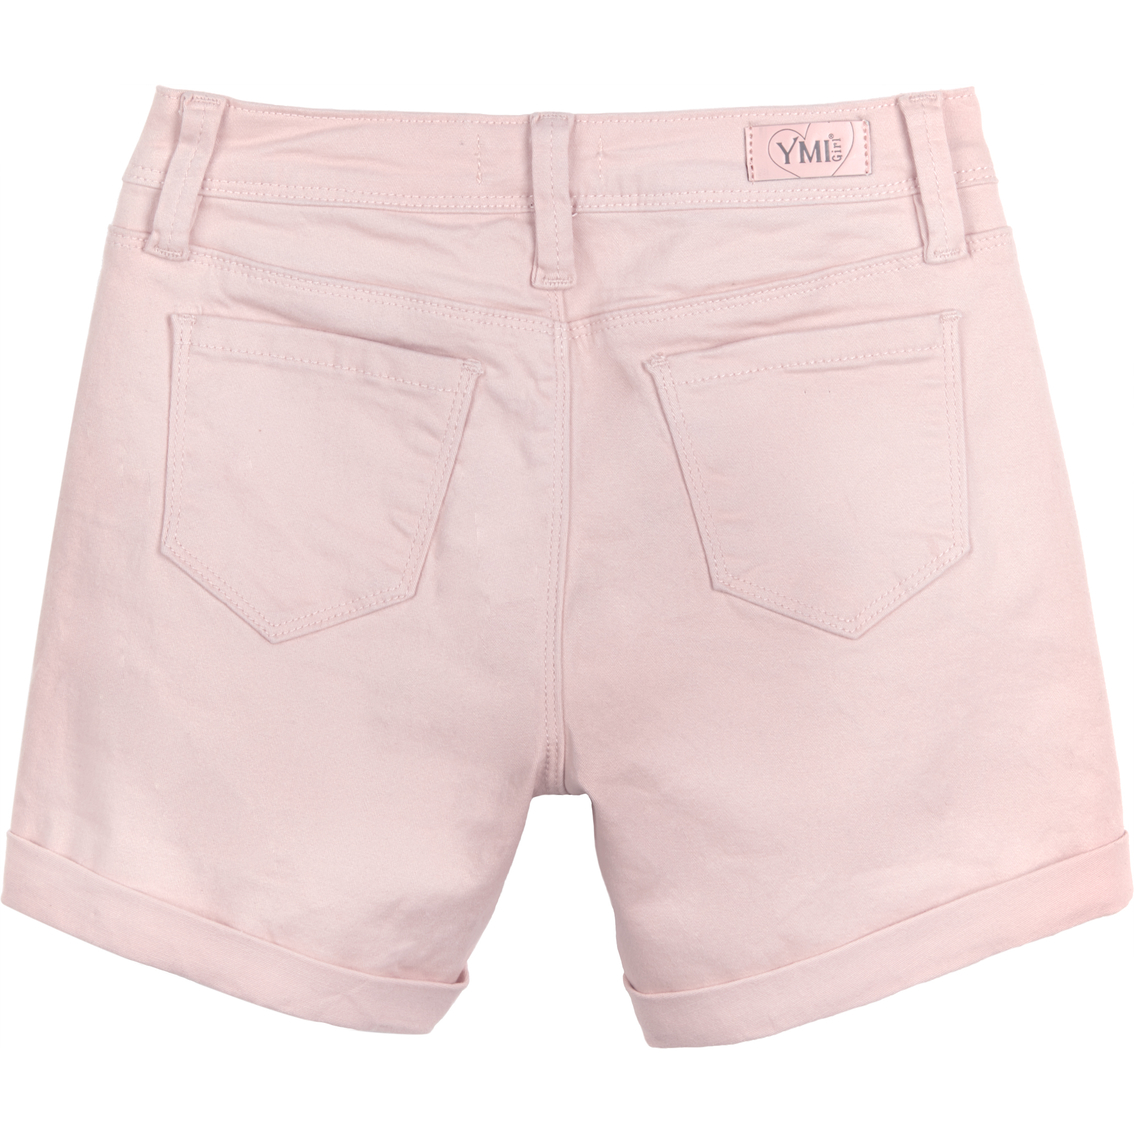 Ymi Jeans Girls Twill Cuff Shorts | Girls 7-16 | Clothing & Accessories ...